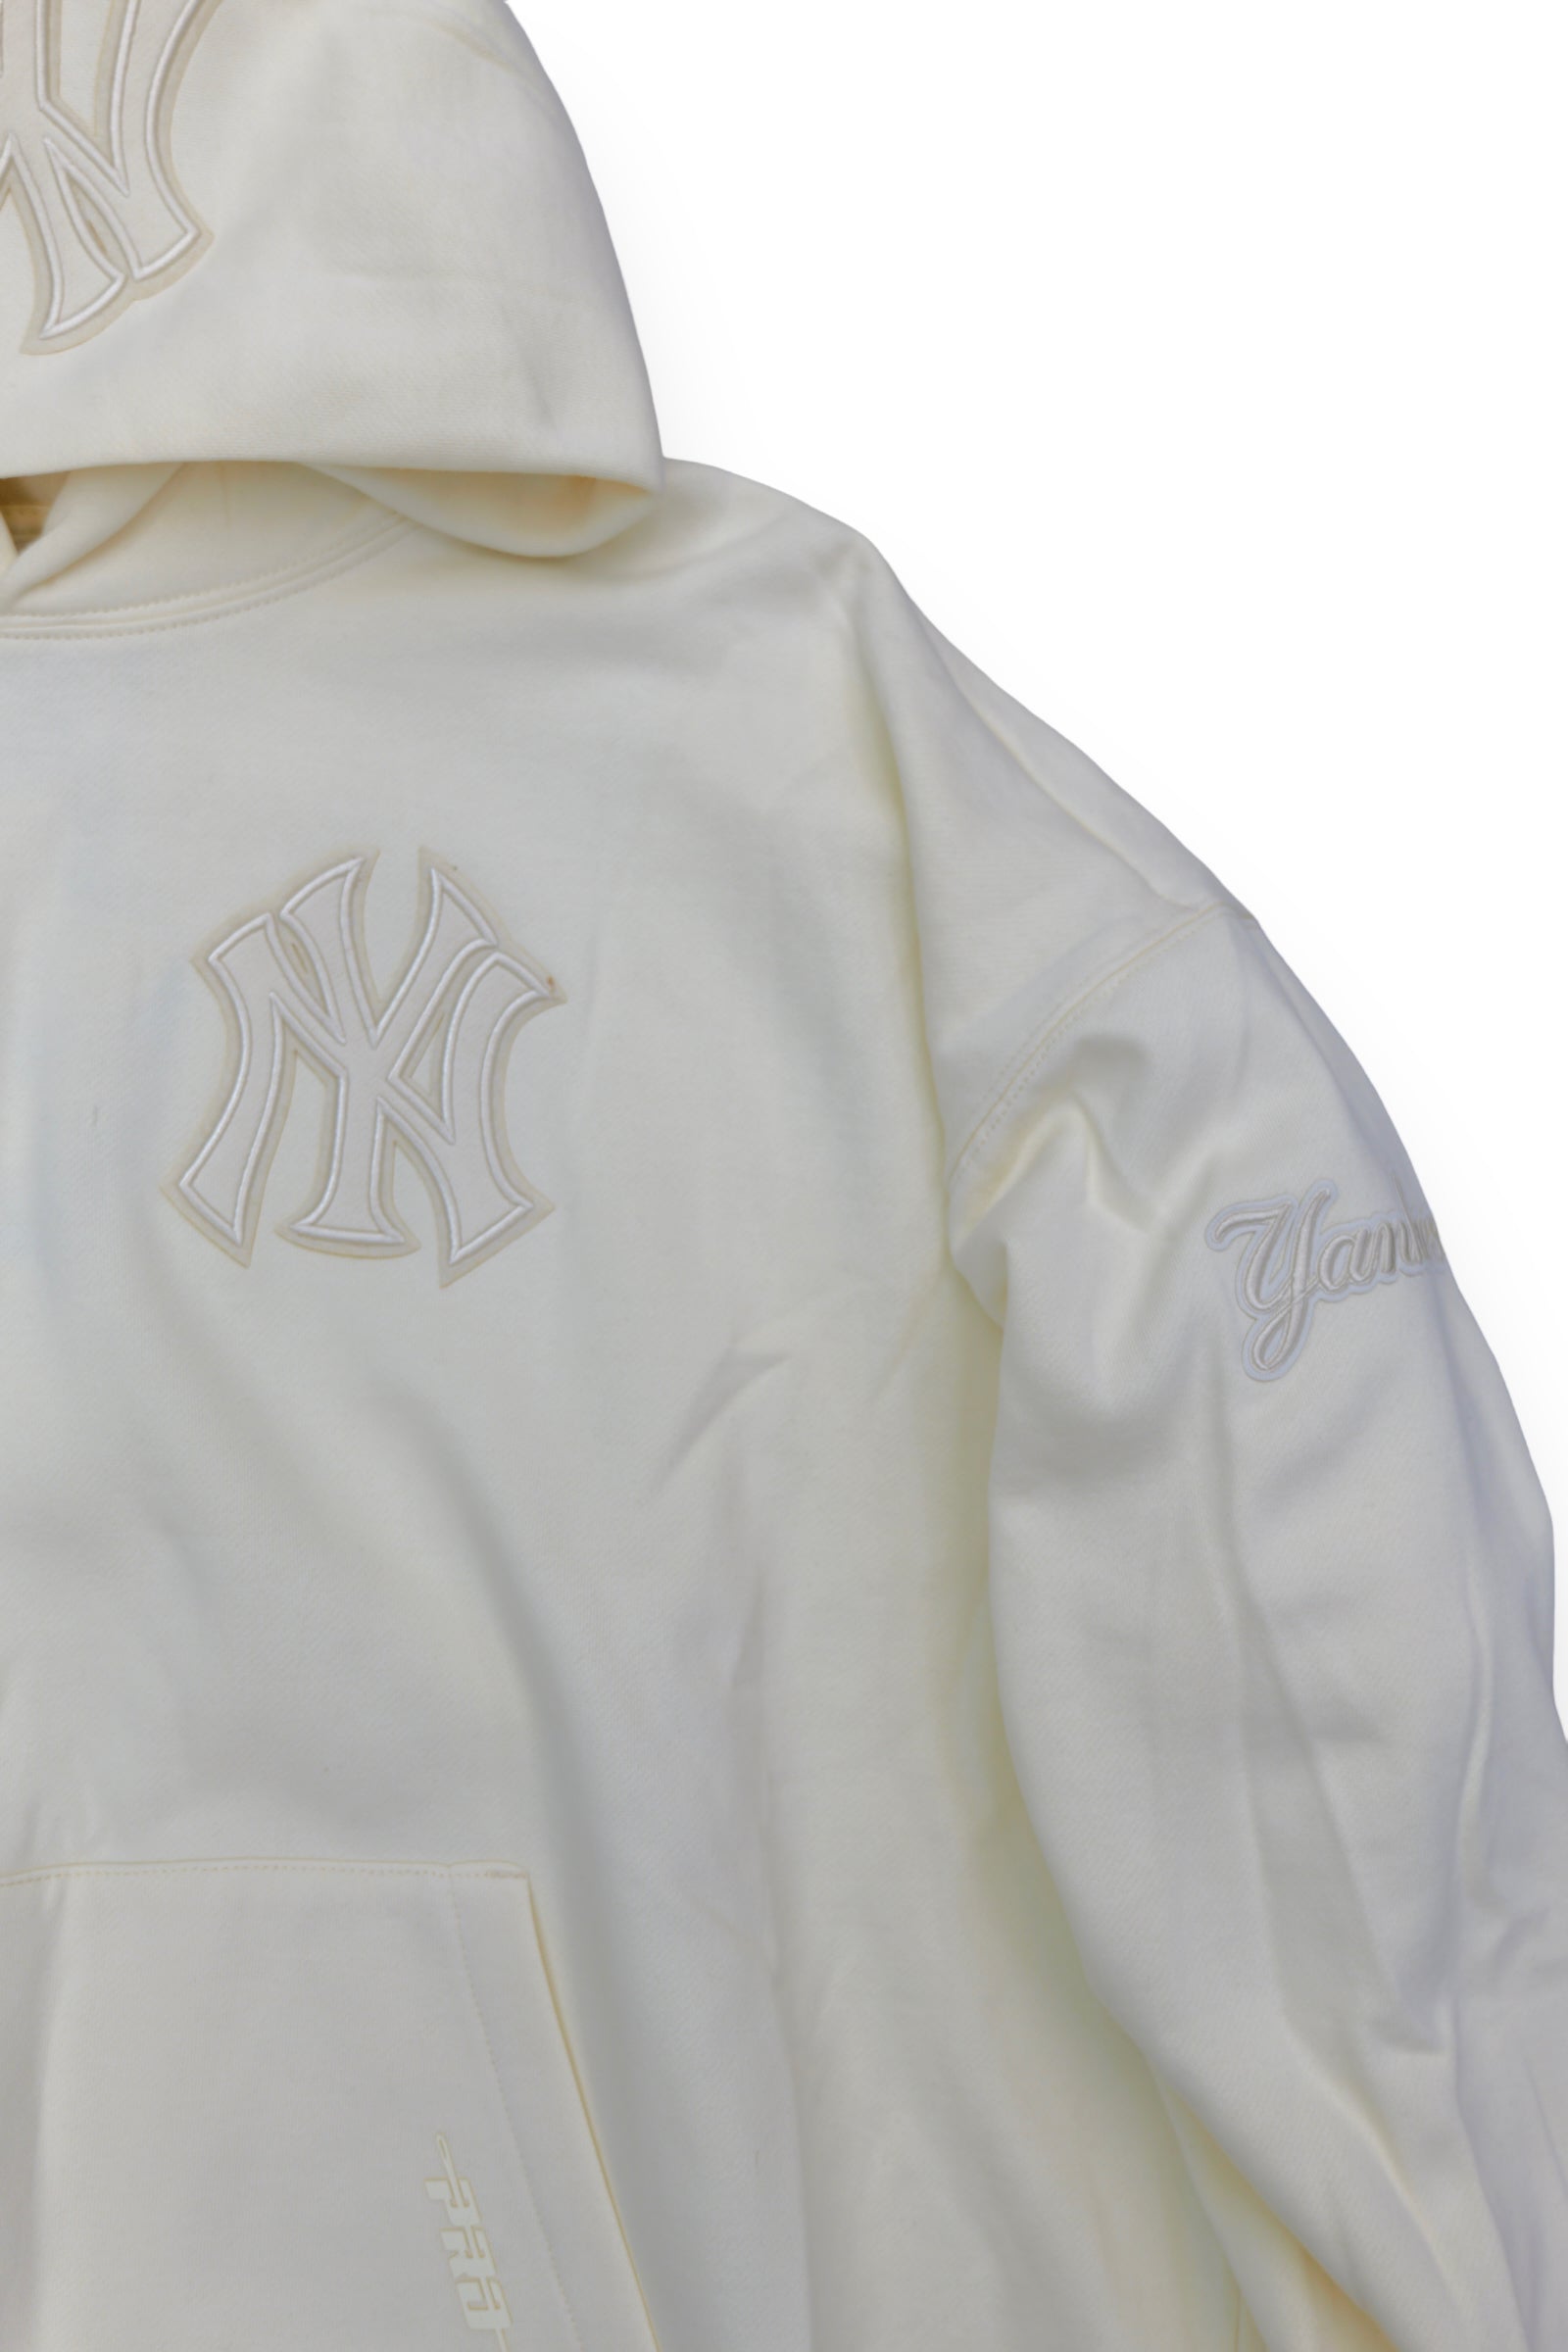 Pro Standard New York Yankees Sweatsuit (Egg Shell)